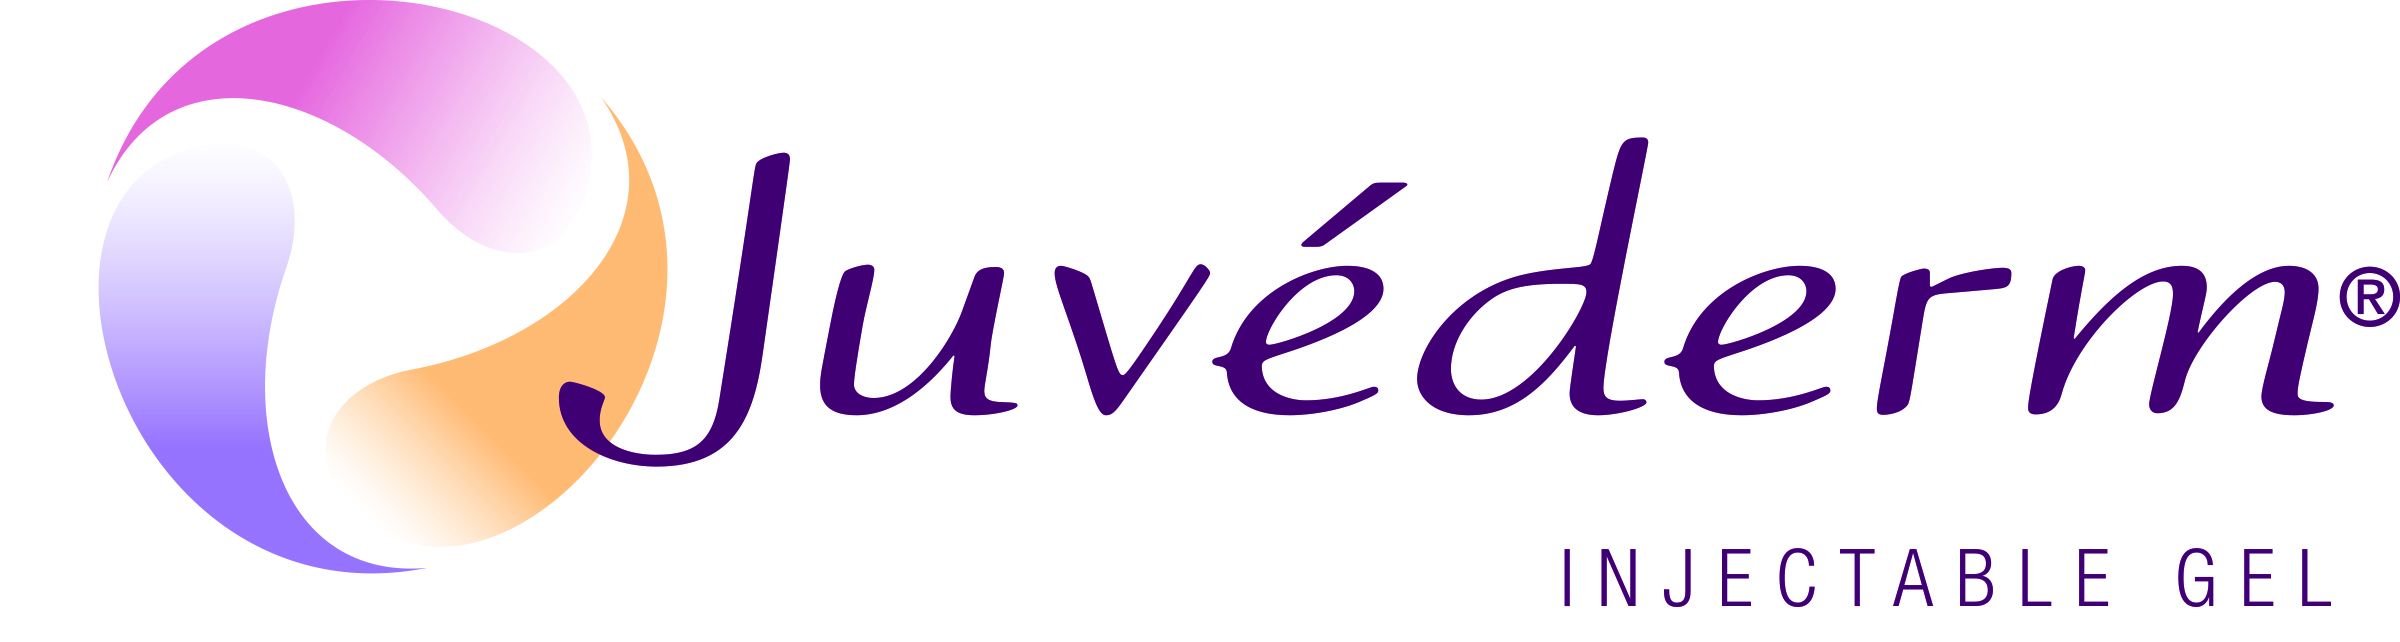 juvederm_injectable_gel_logo